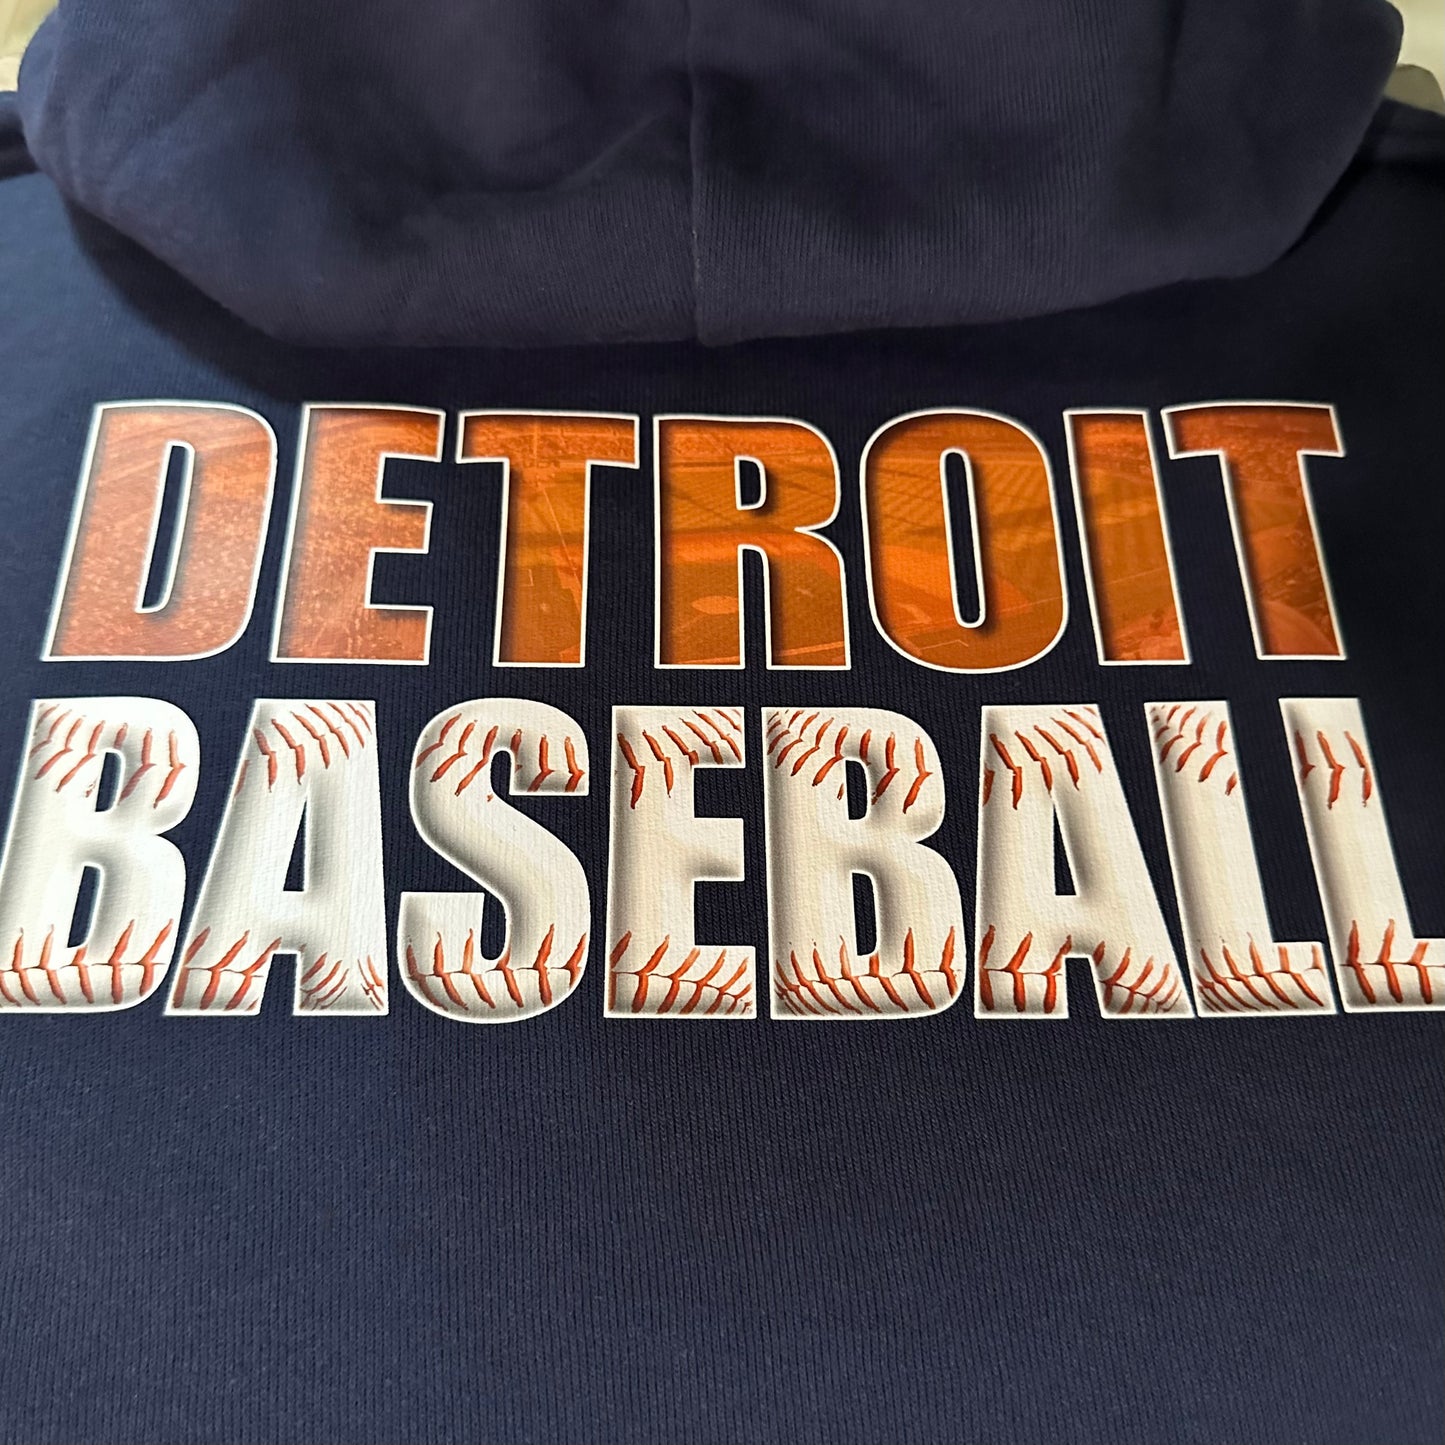 Detroit Baseball Hoodie